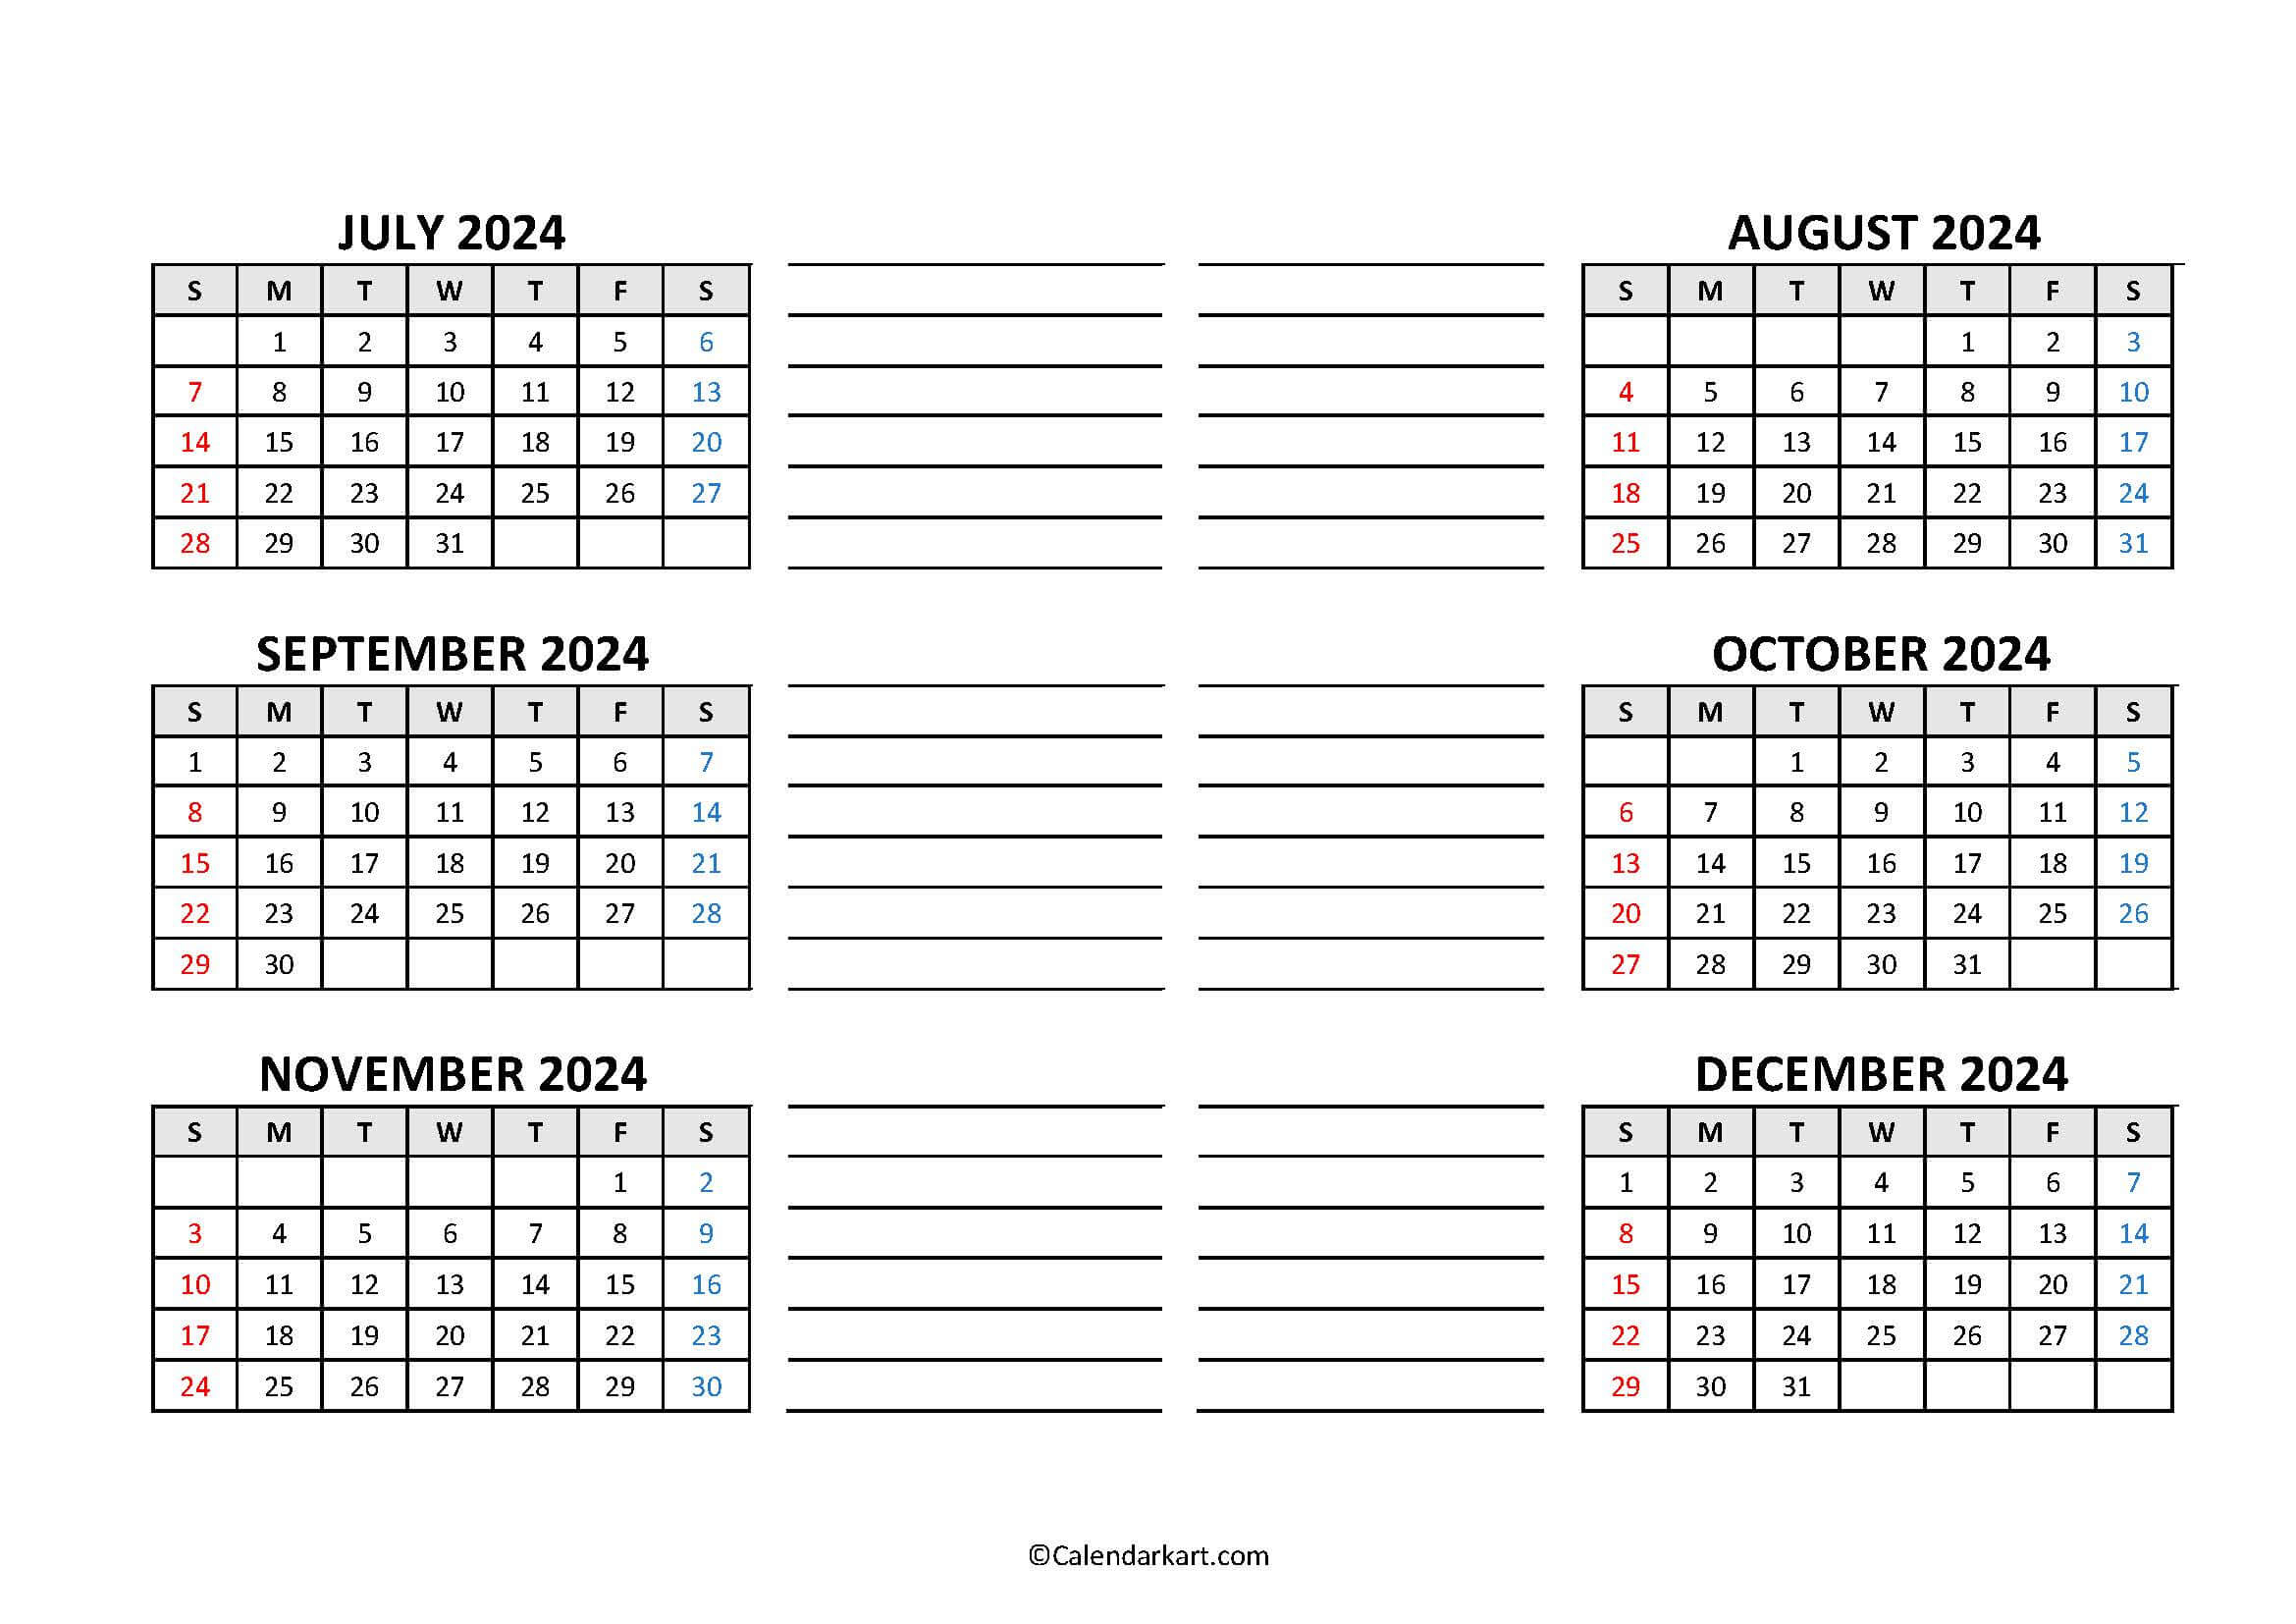 Free Printable Year At A Glance Calendar 2024 - Calendarkart | Printable Calendar July 2024 To December 2024